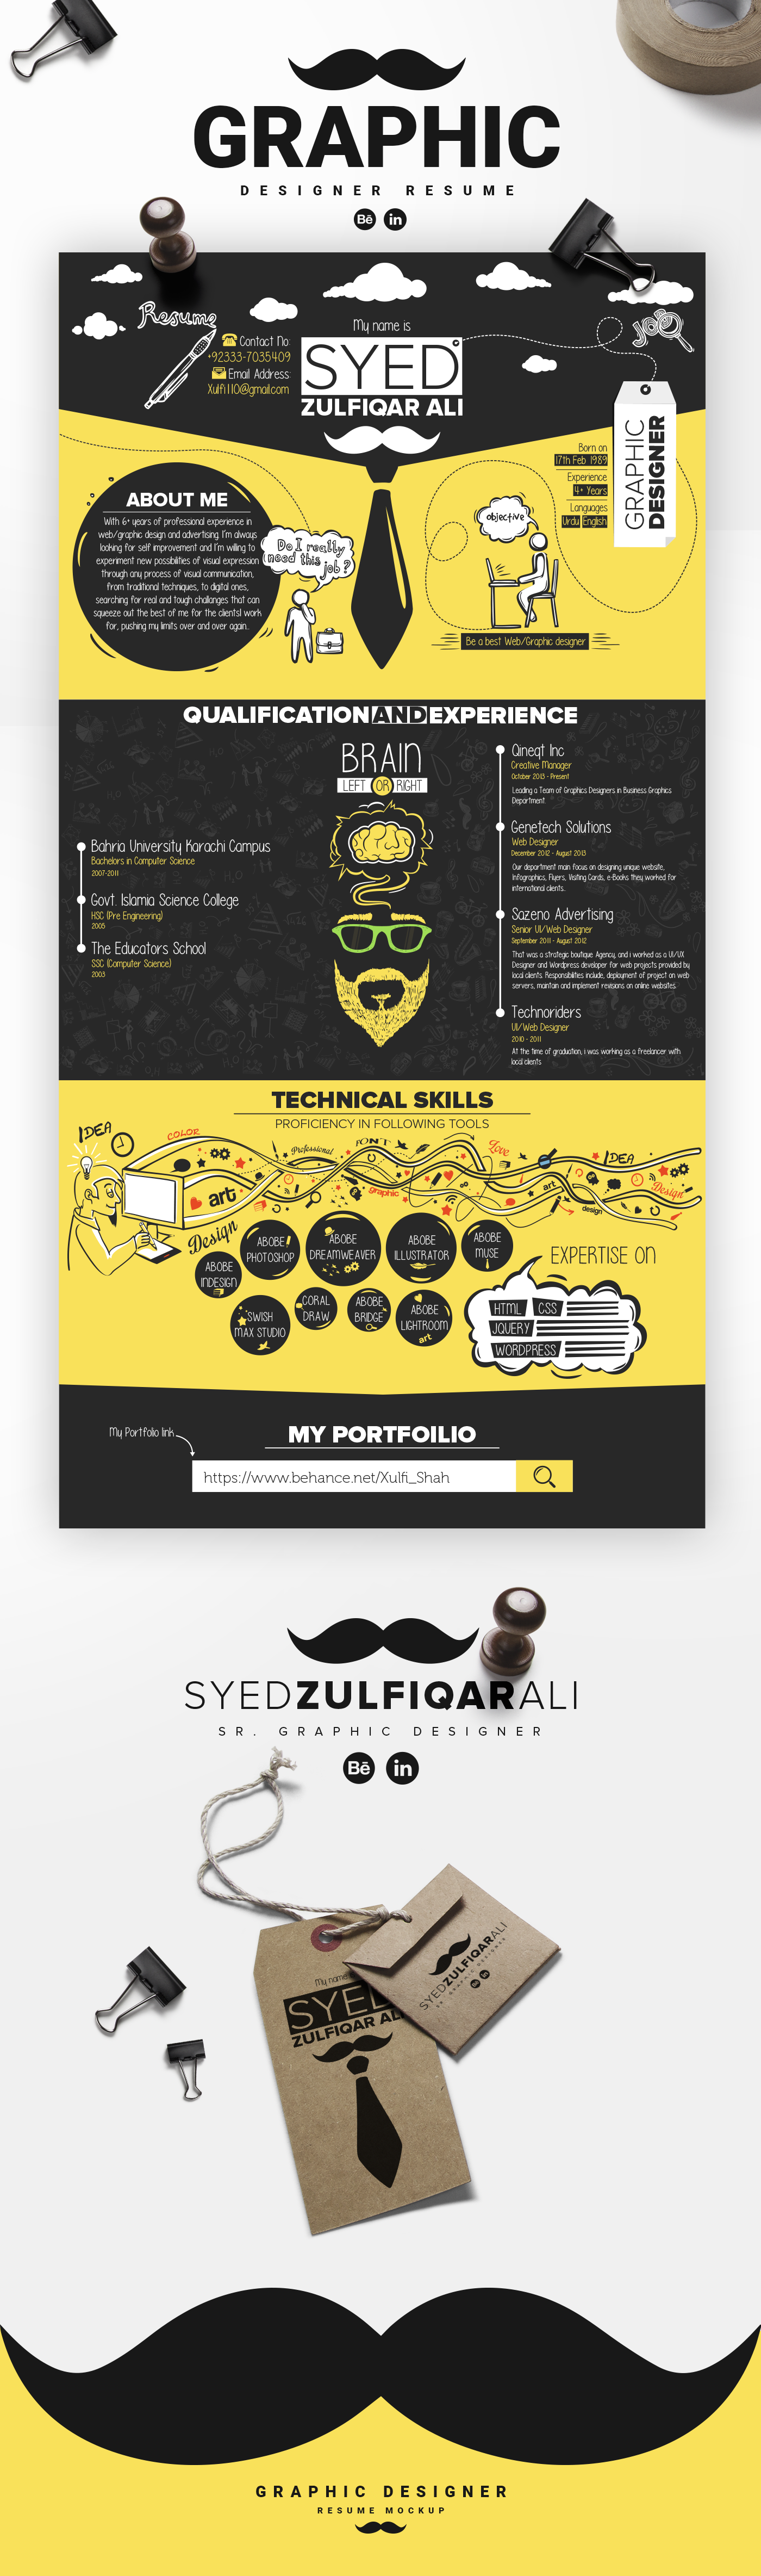 Resume Mockup graphic designer resume CV Creative resume design mustache resume awesome resume